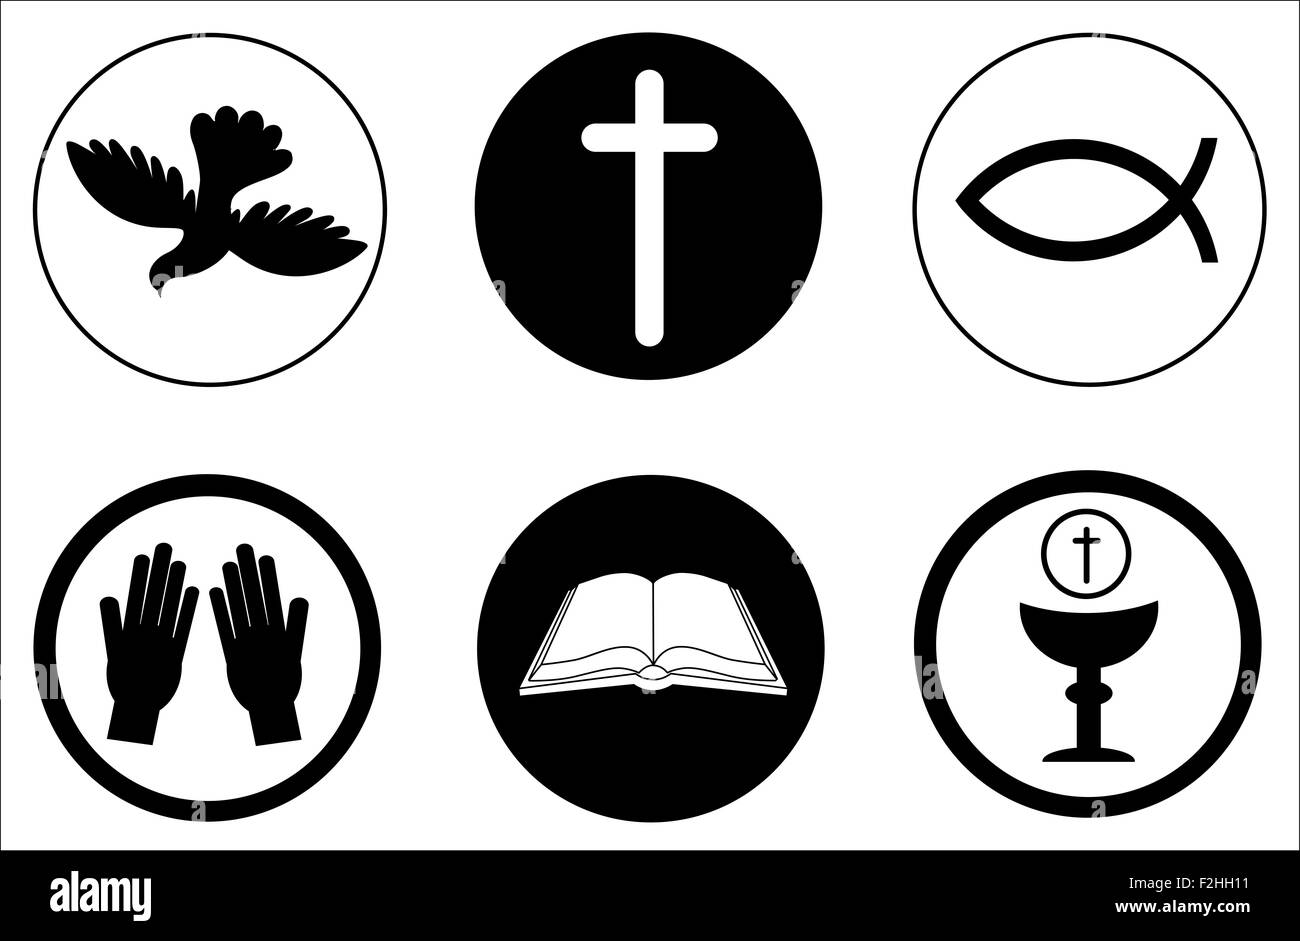 Christianity icons and symbols Stock Photo